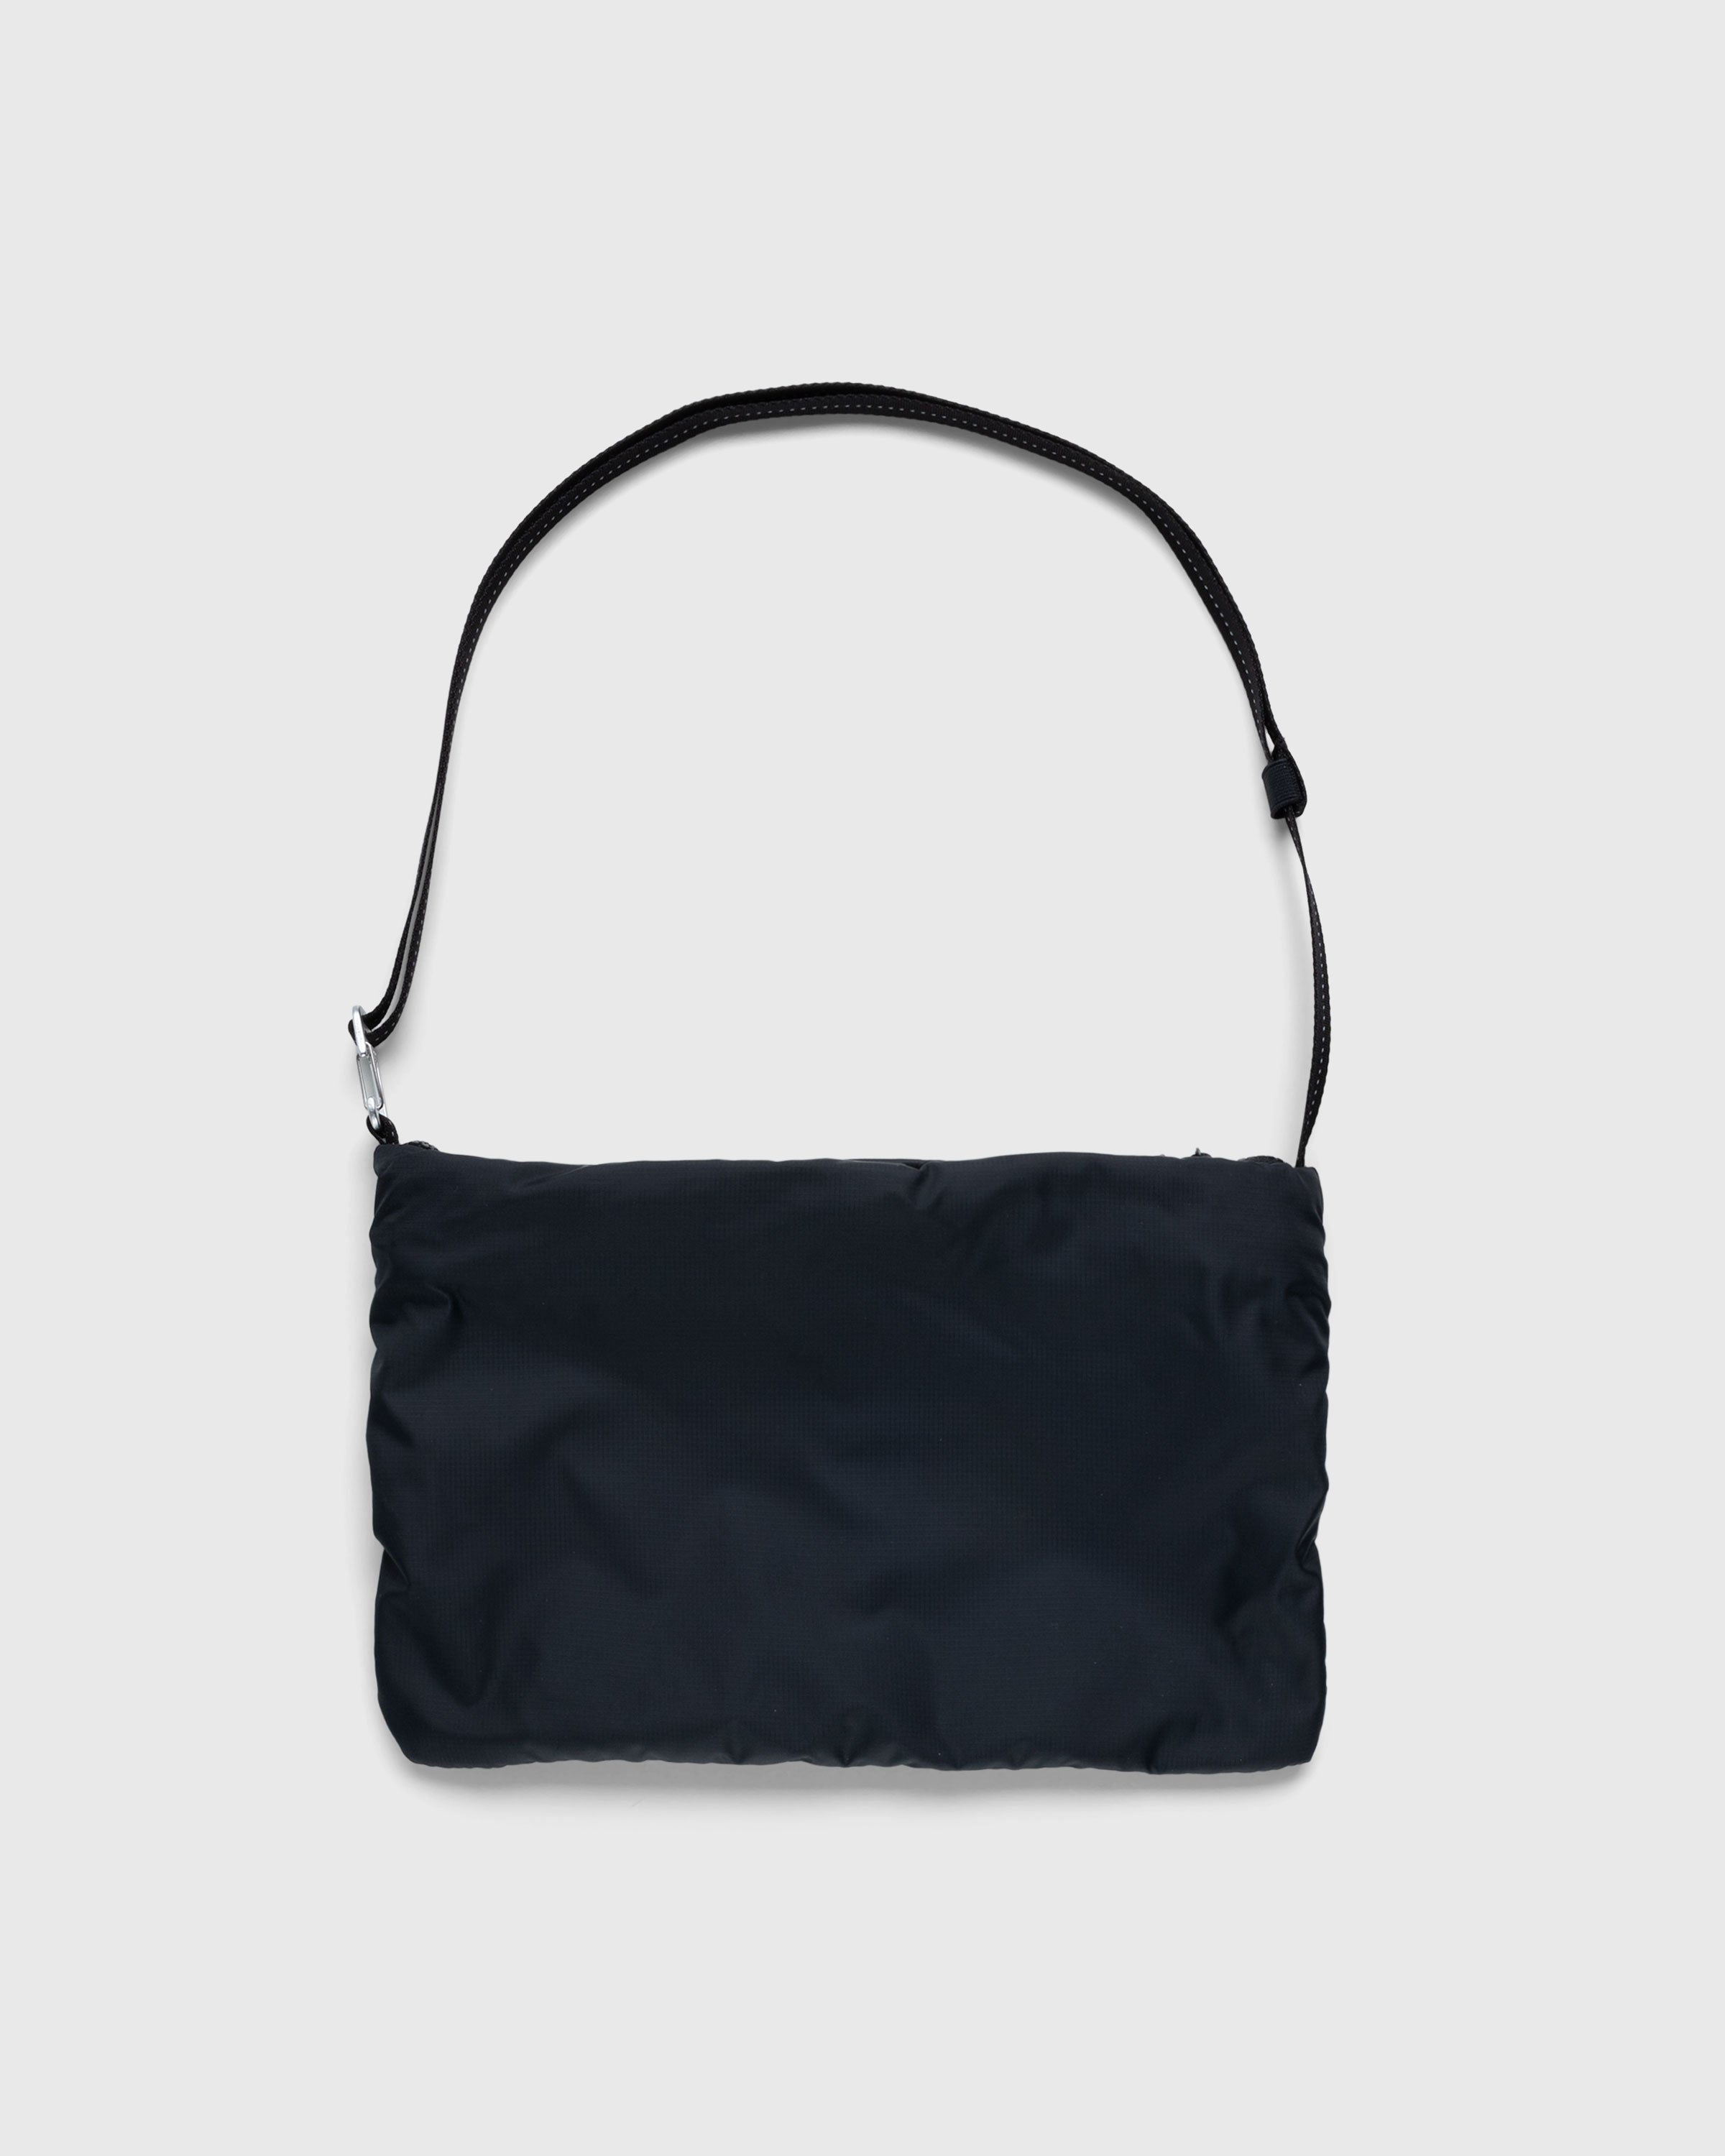 The North Face - Flyweight Shoulder Bag Grey/Black - Accessories - Grey - Image 2